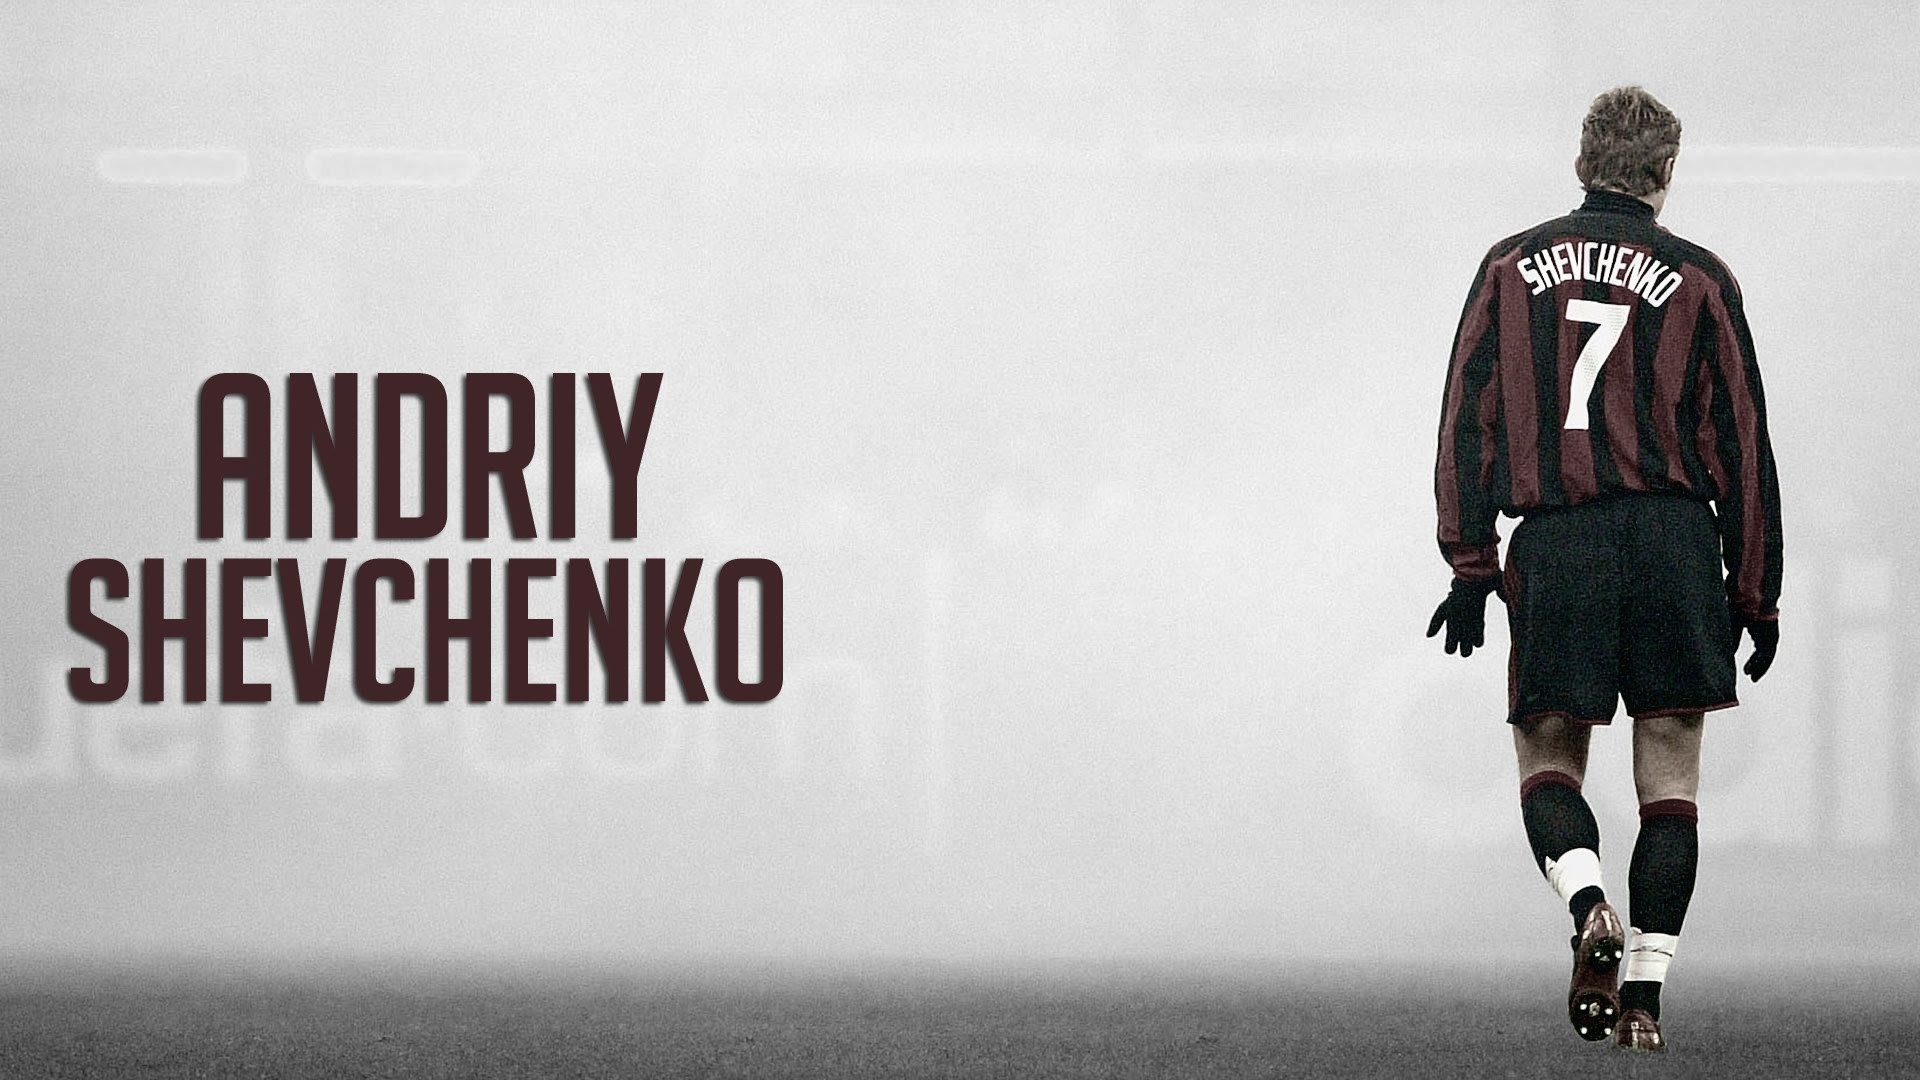 1920x1080 Andriy Shevchenko â Legendary Striker â A.C. Milan 1999-2006 - YouTube